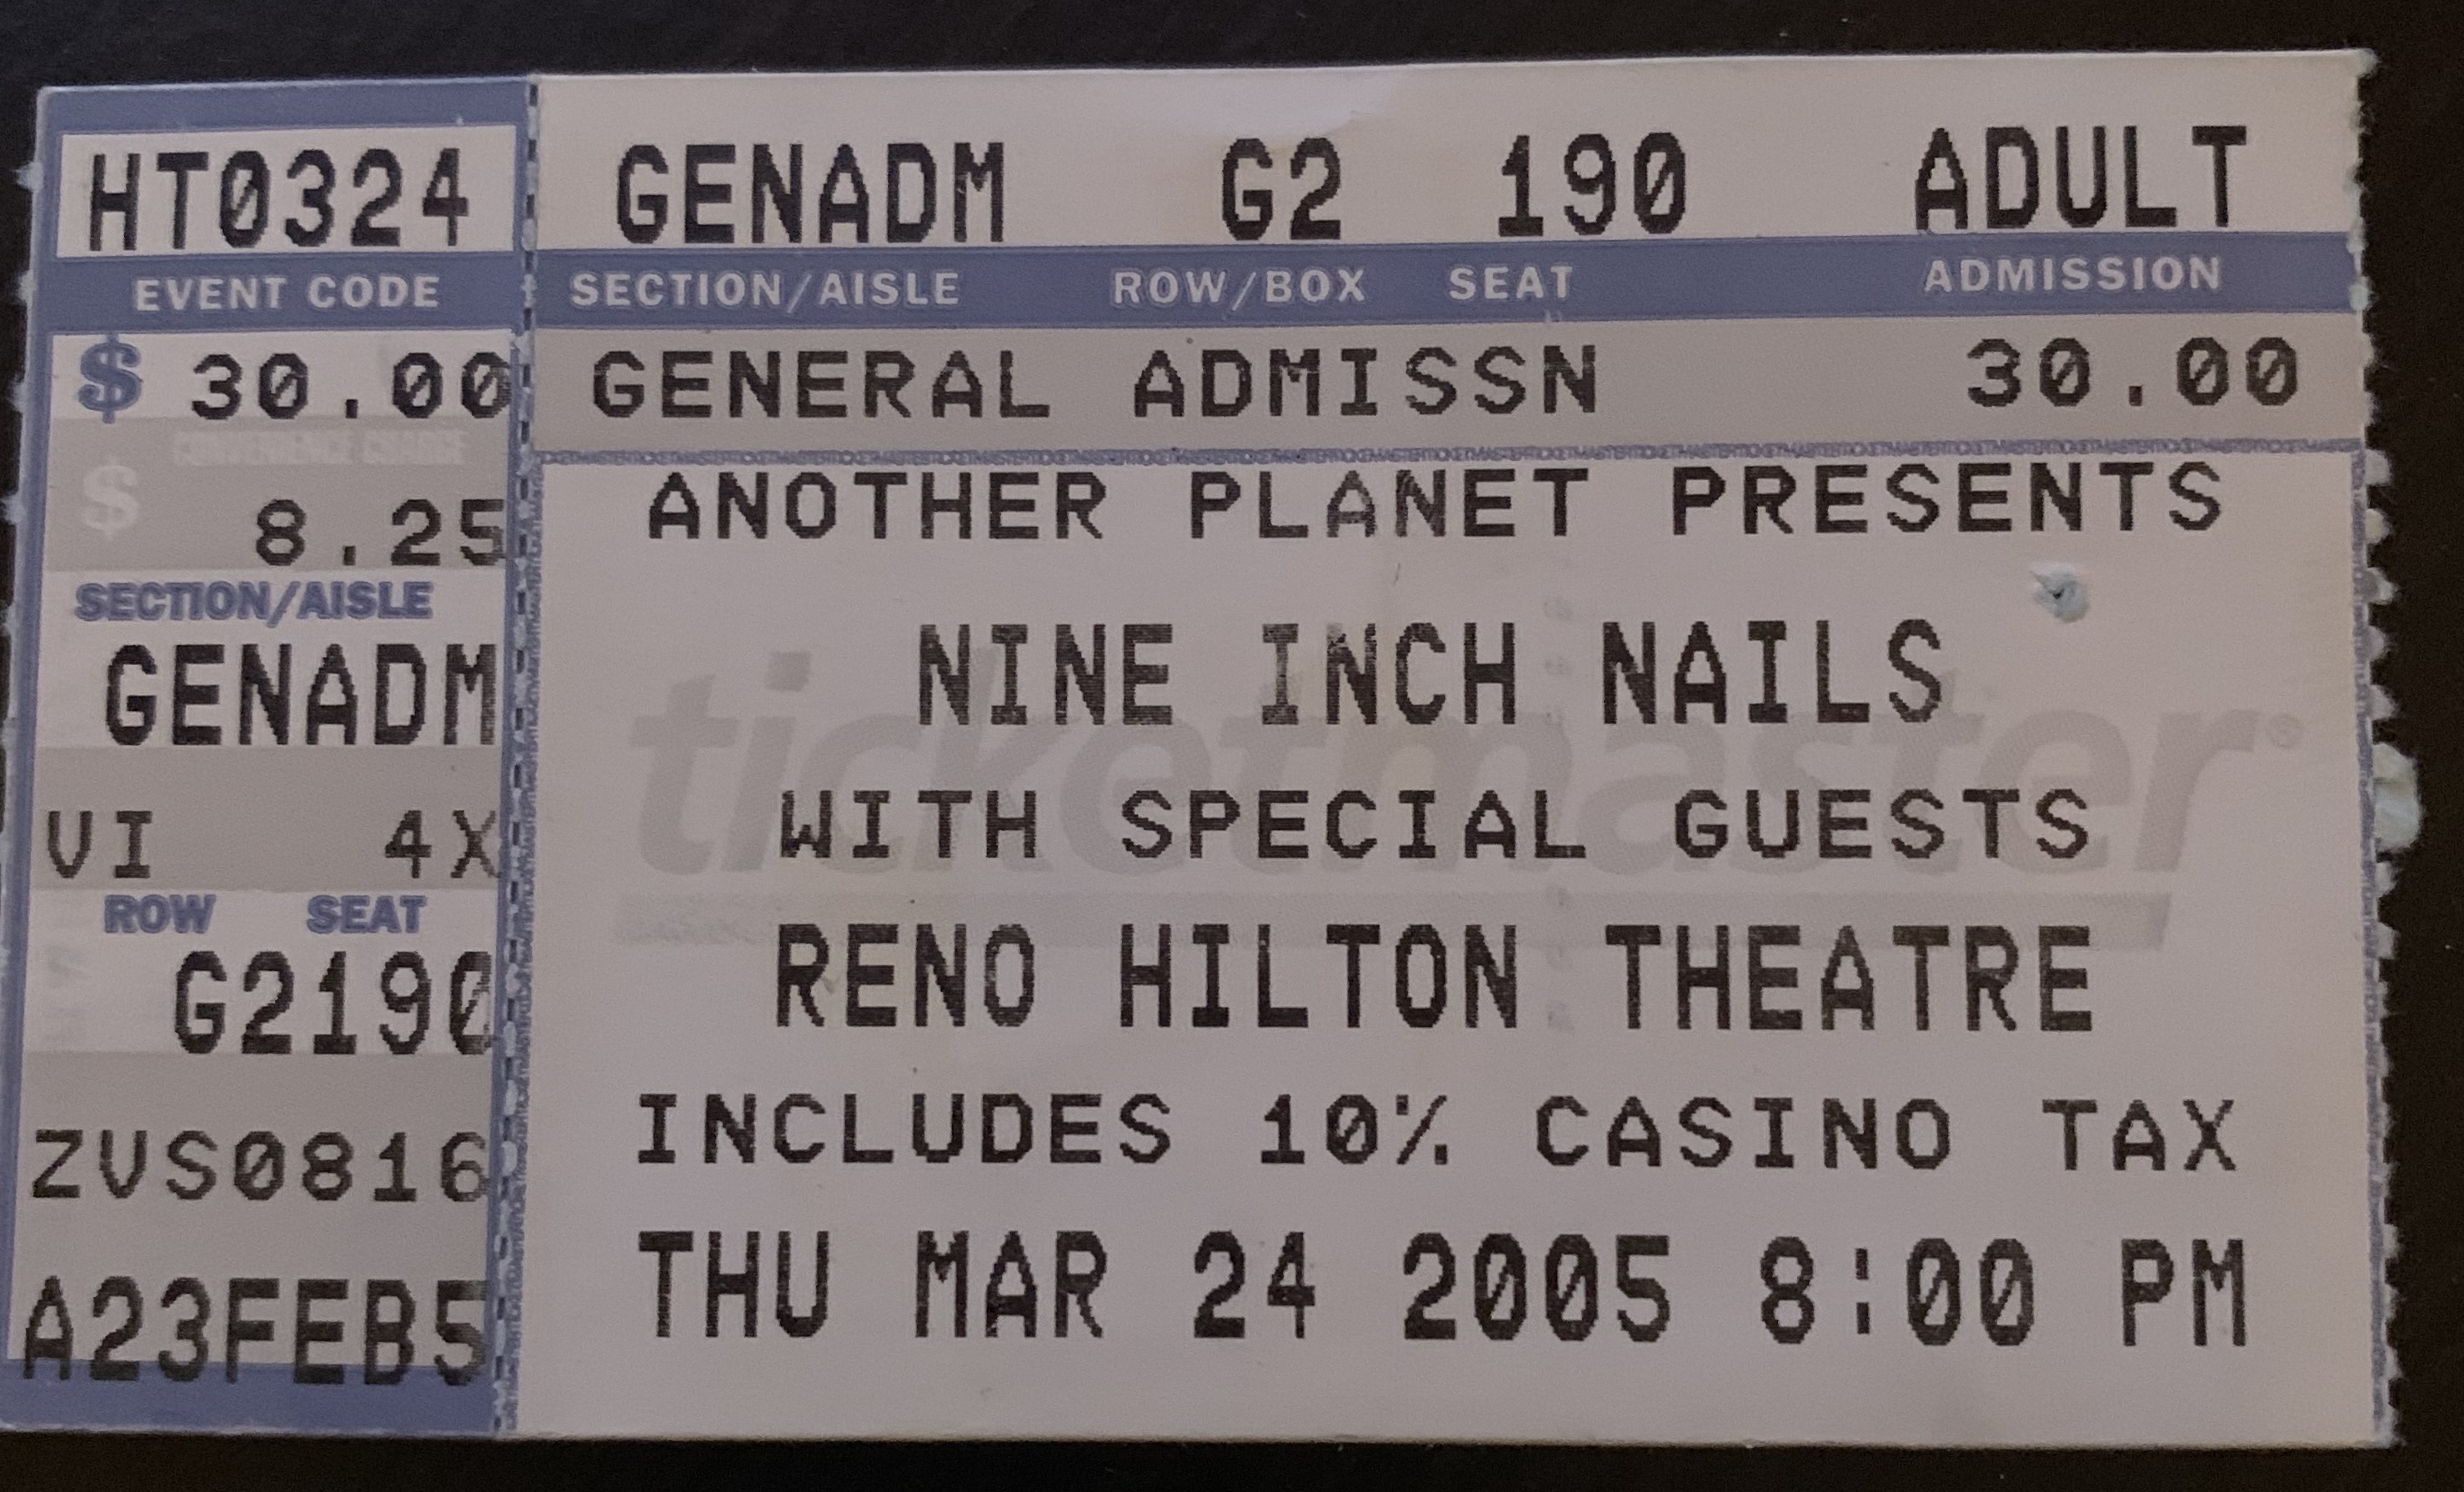 2005/03/24 Ticket